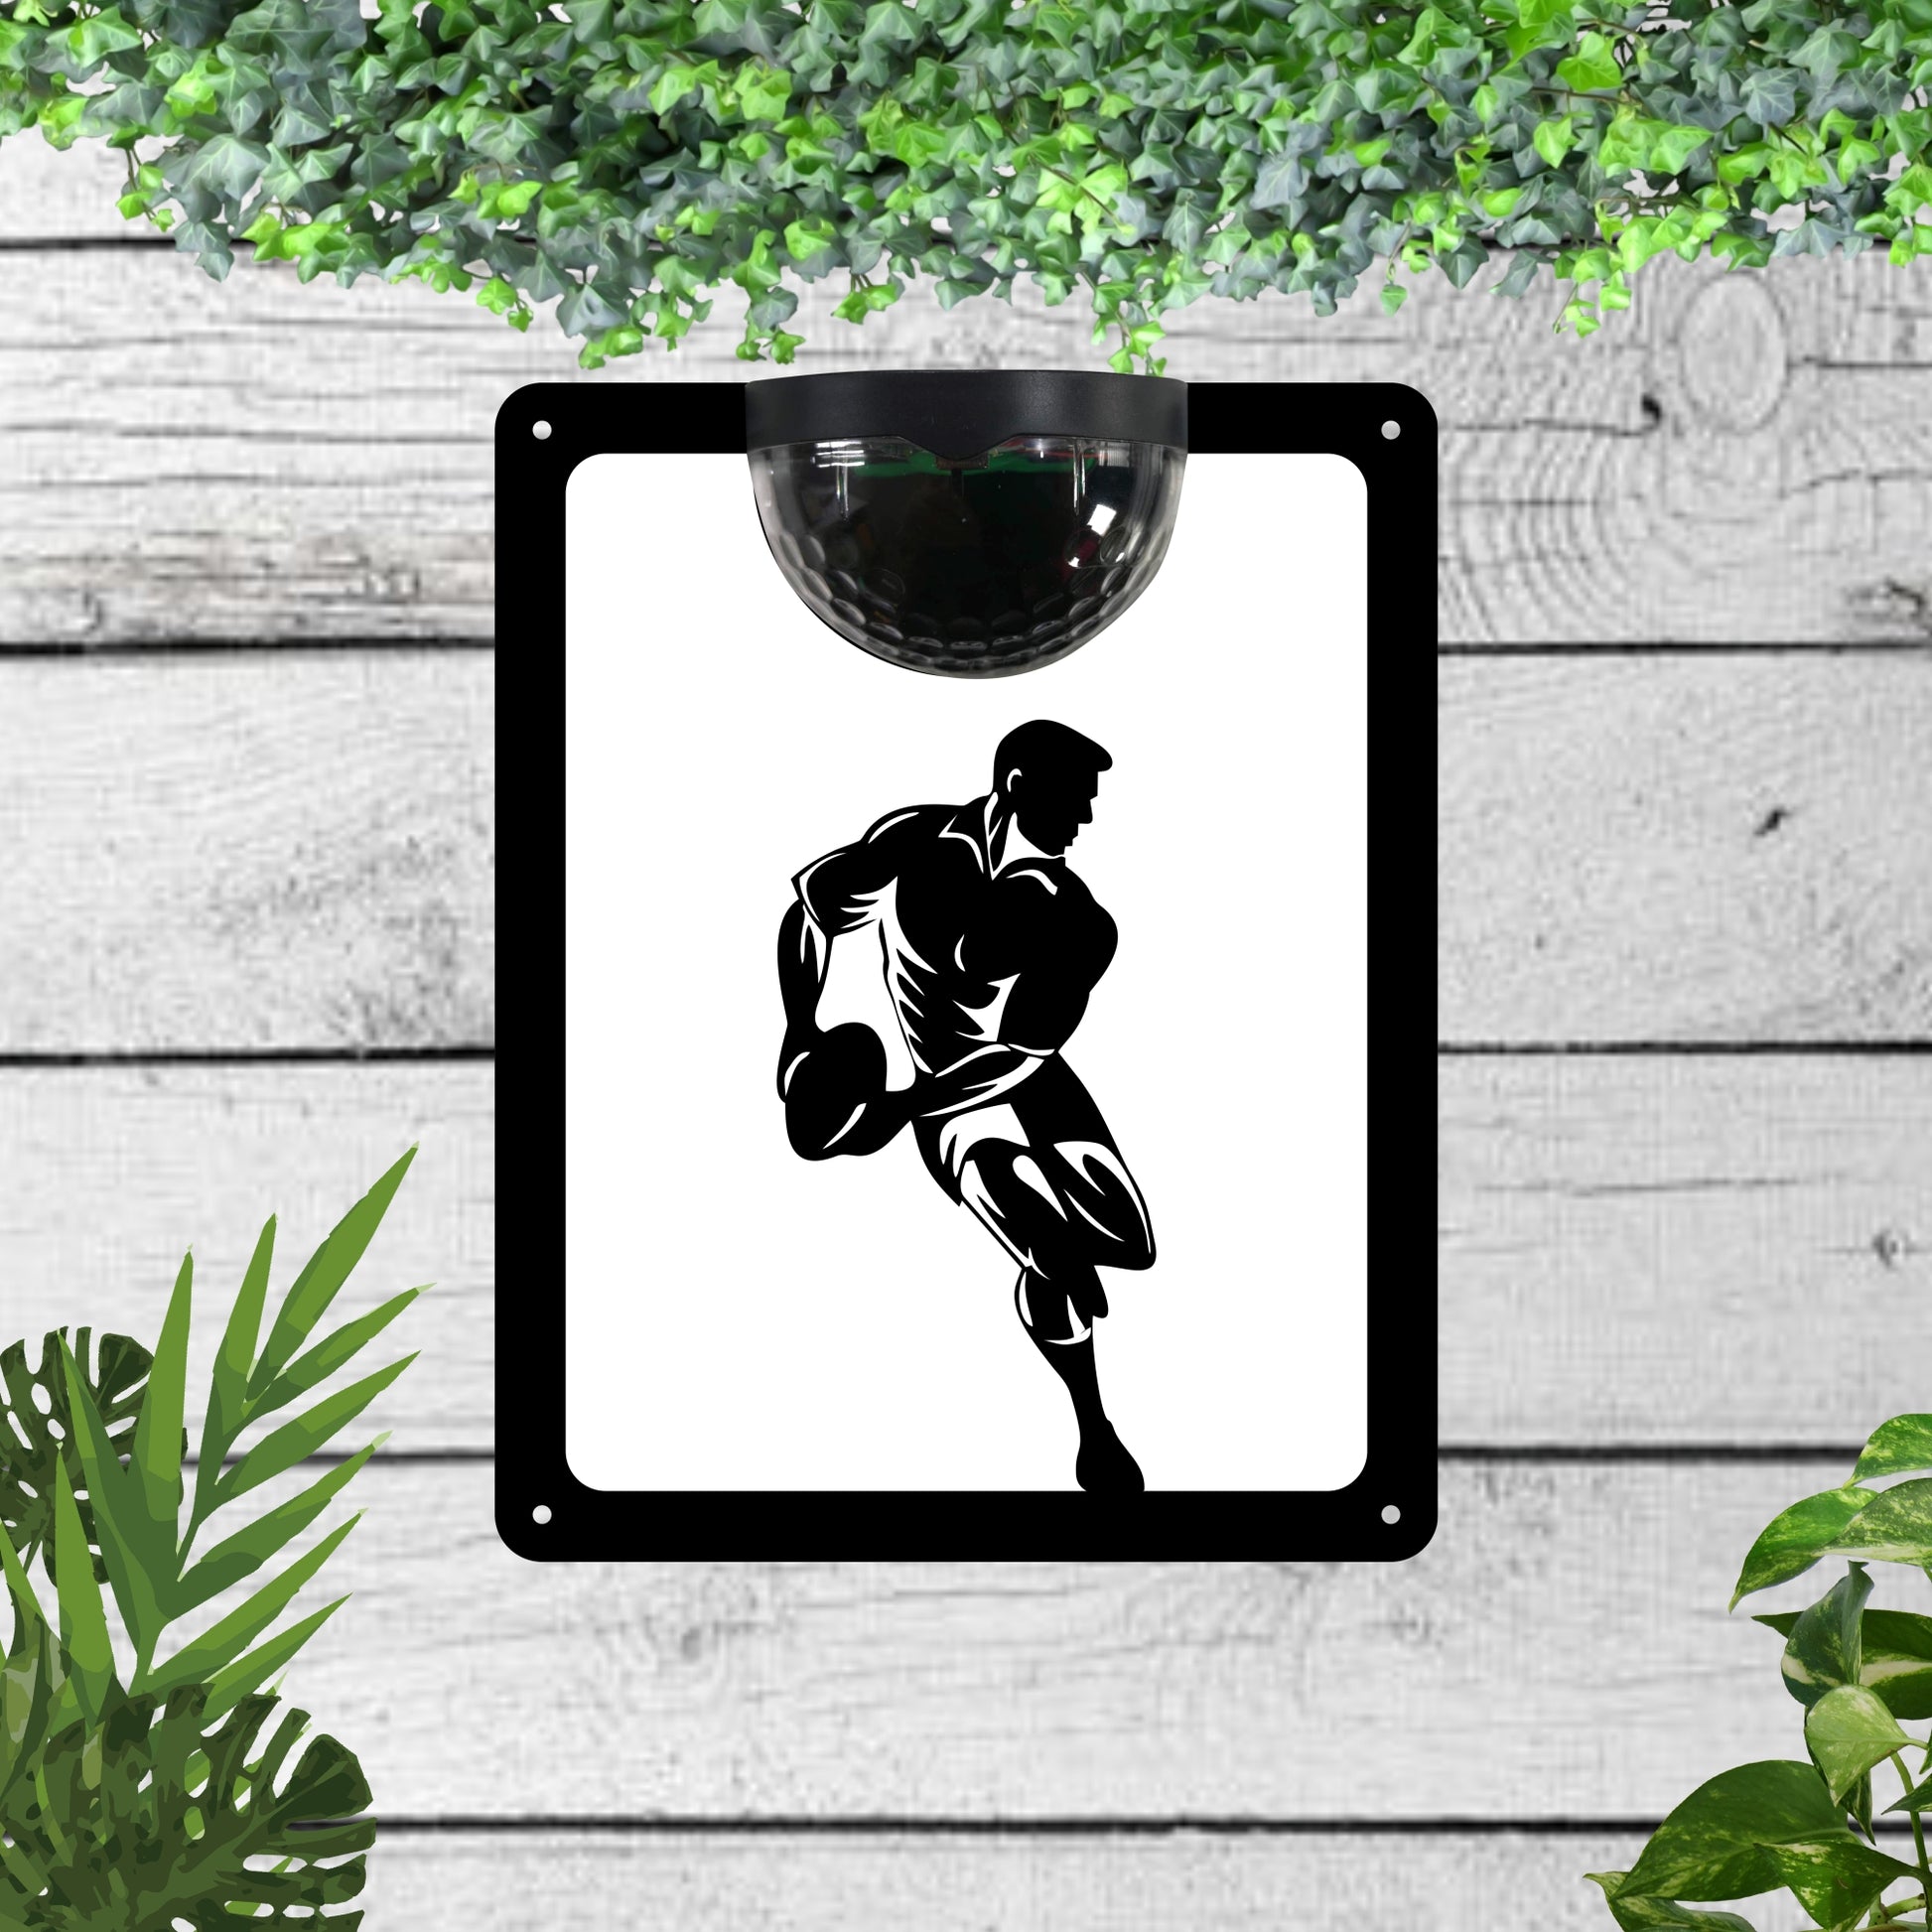 Garden solar wall plaque featuring a rugby player | John Alans